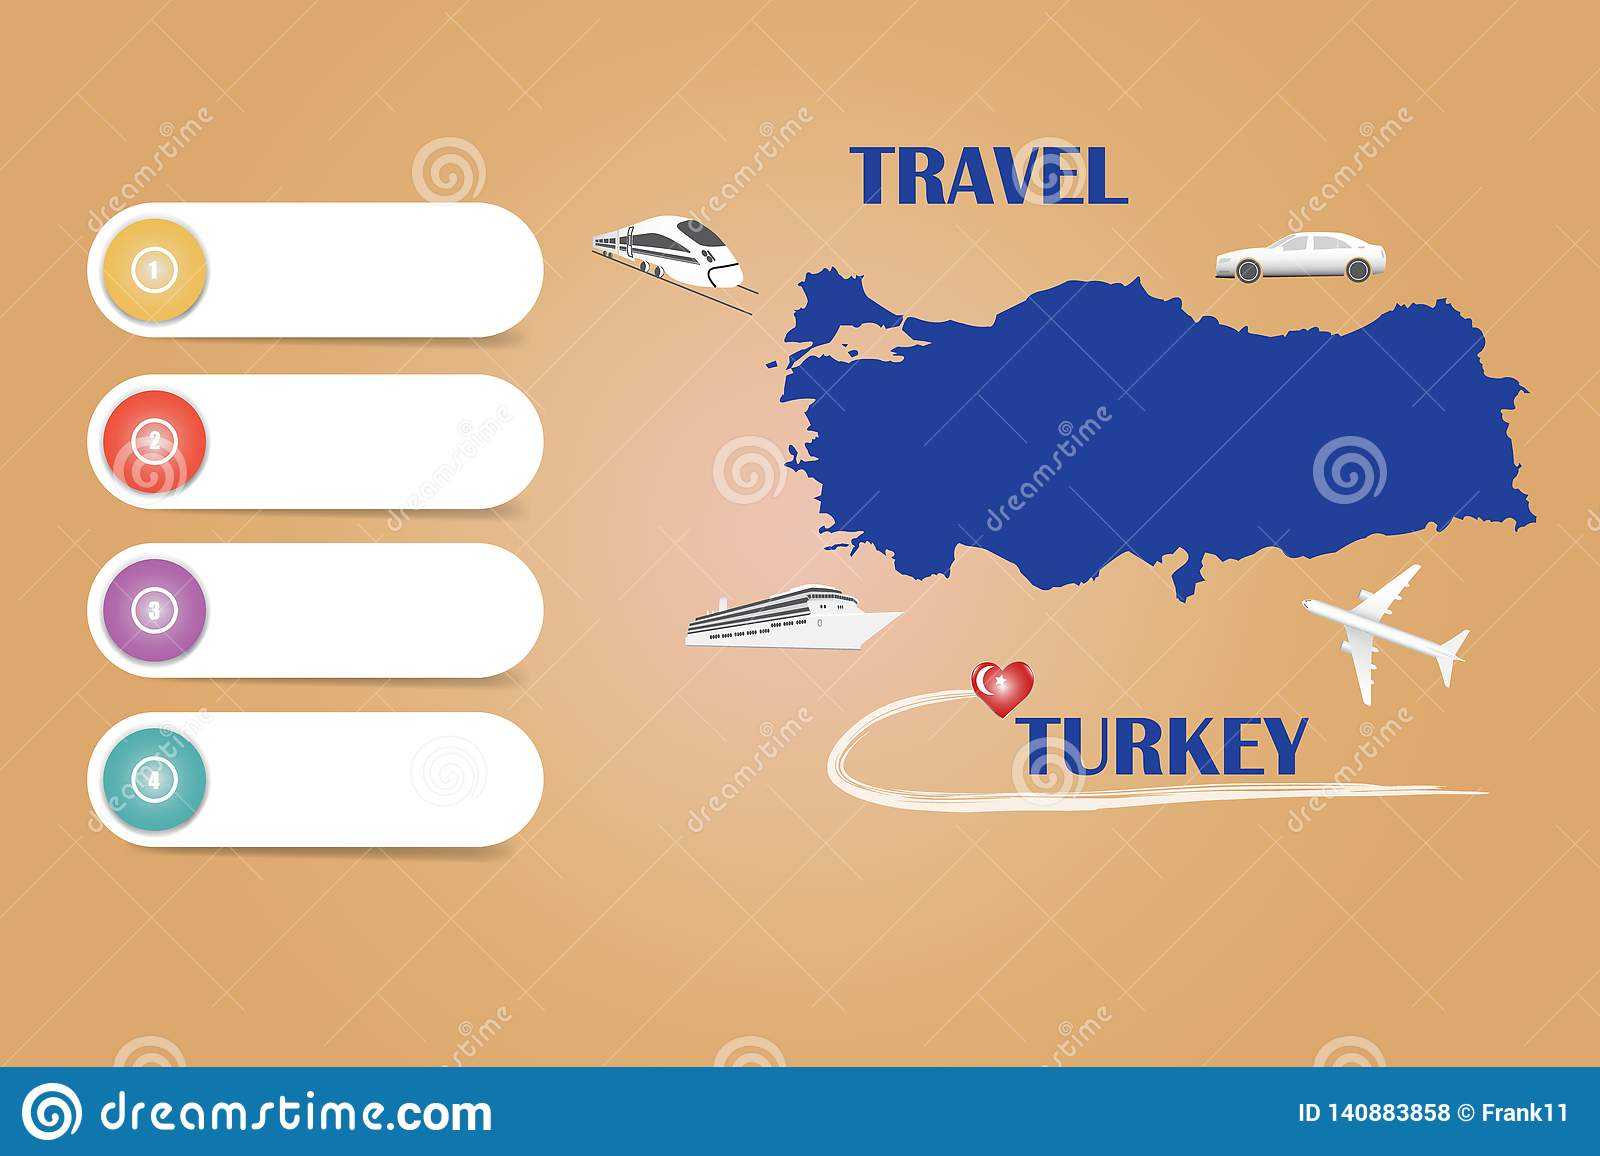 Travel Turkey Template Vector Stock Vector – Illustration Of Inside Blank Turkey Template